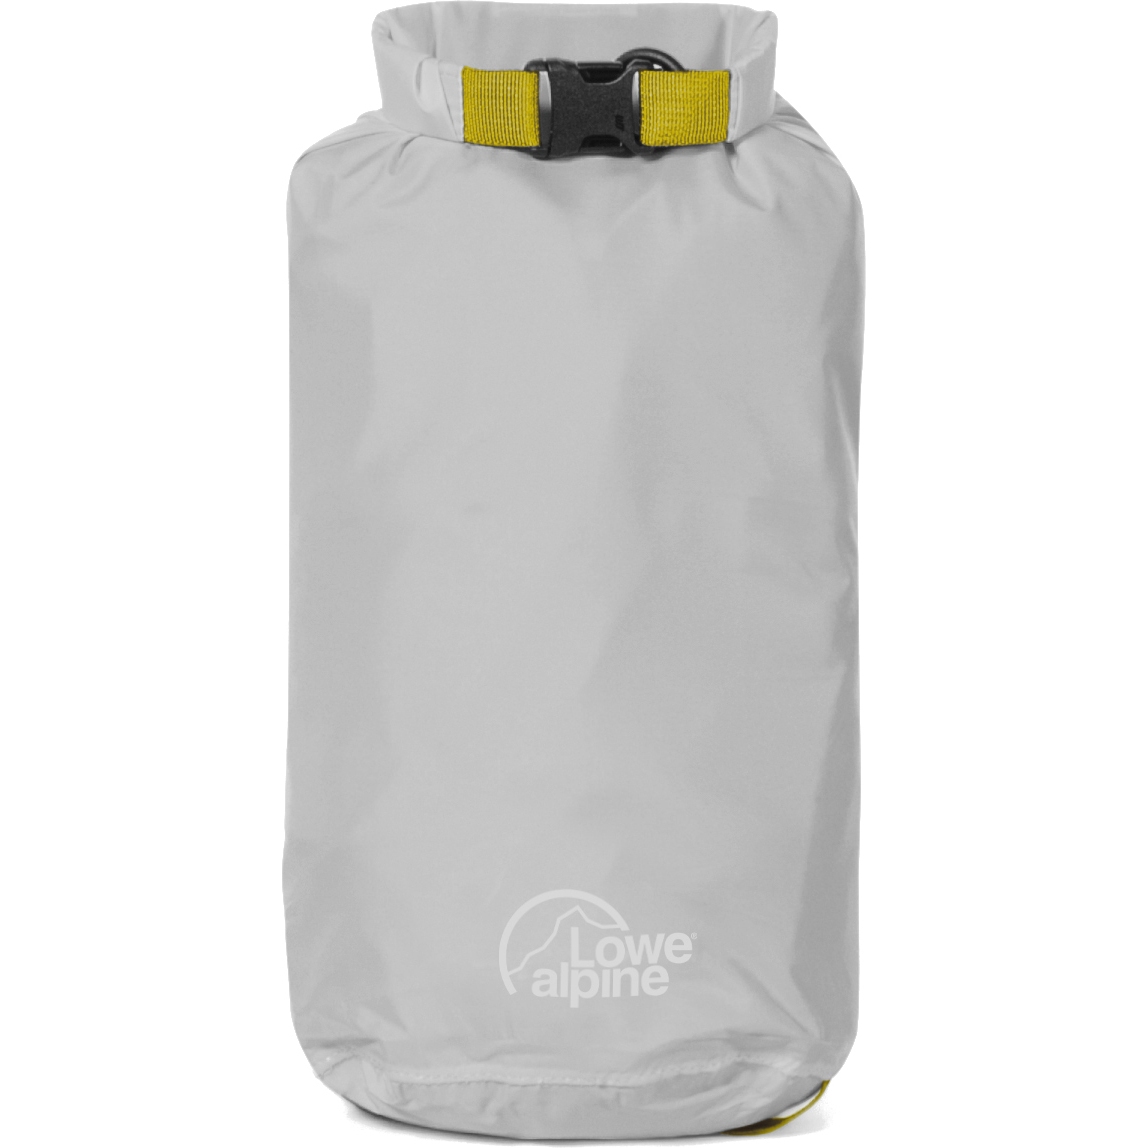 Productfoto van Lowe Alpine Ultralite - Dry Bag - 4L